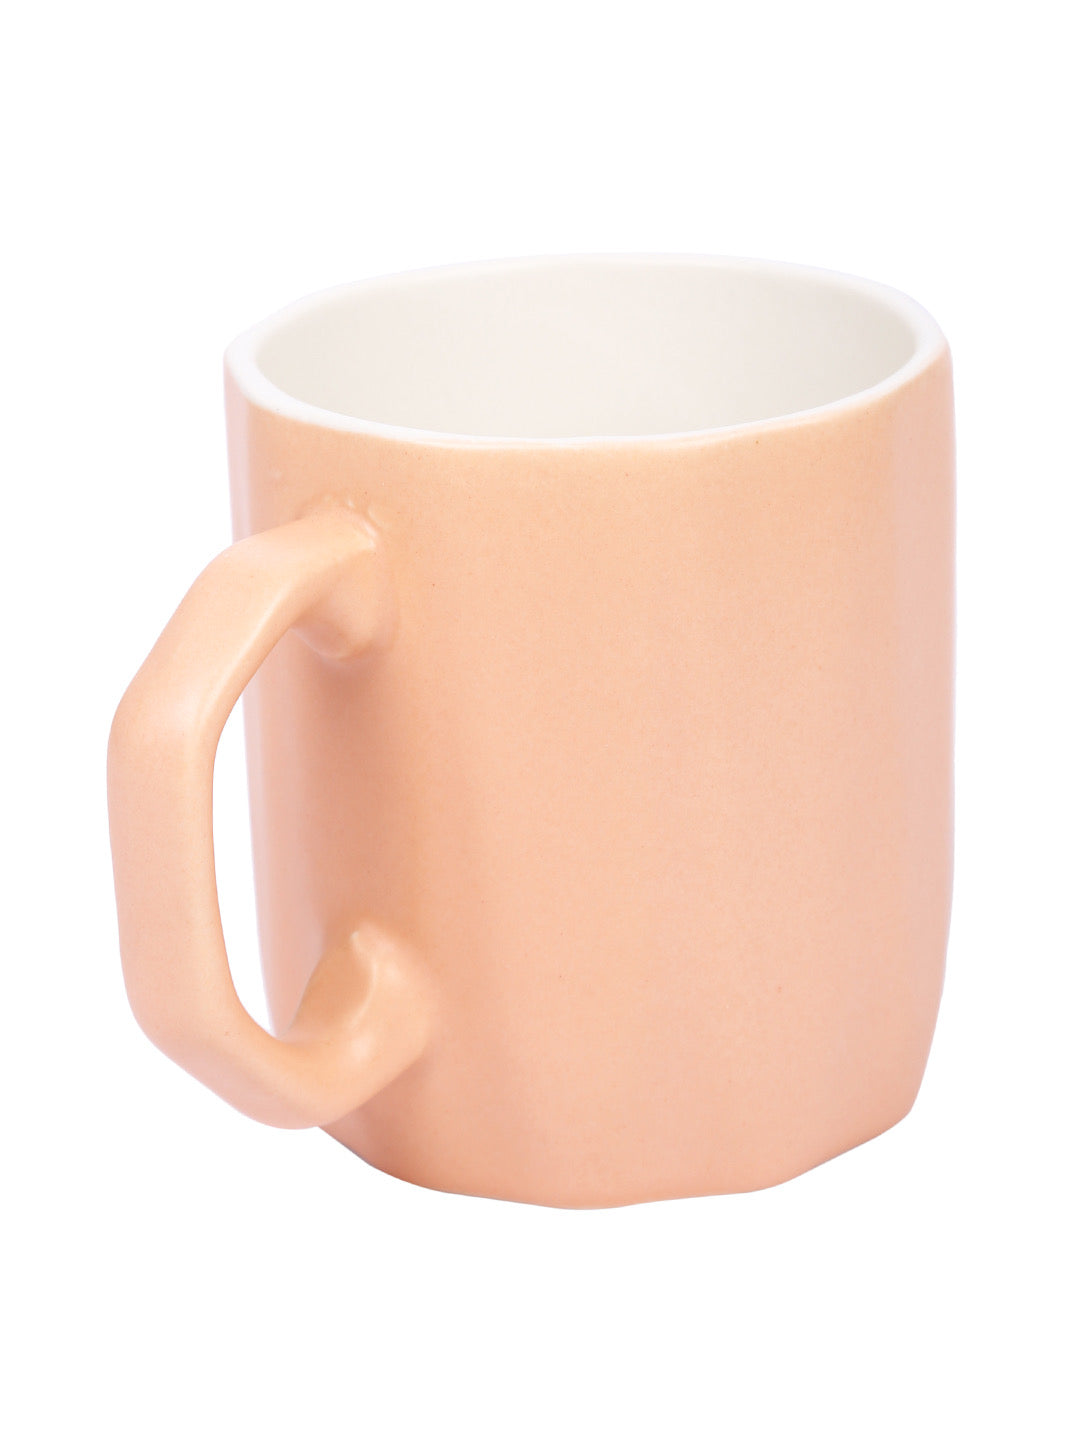 Set of 4 Ceramic Peach Coffee Mug - Default Title (CUP2103OR_4)